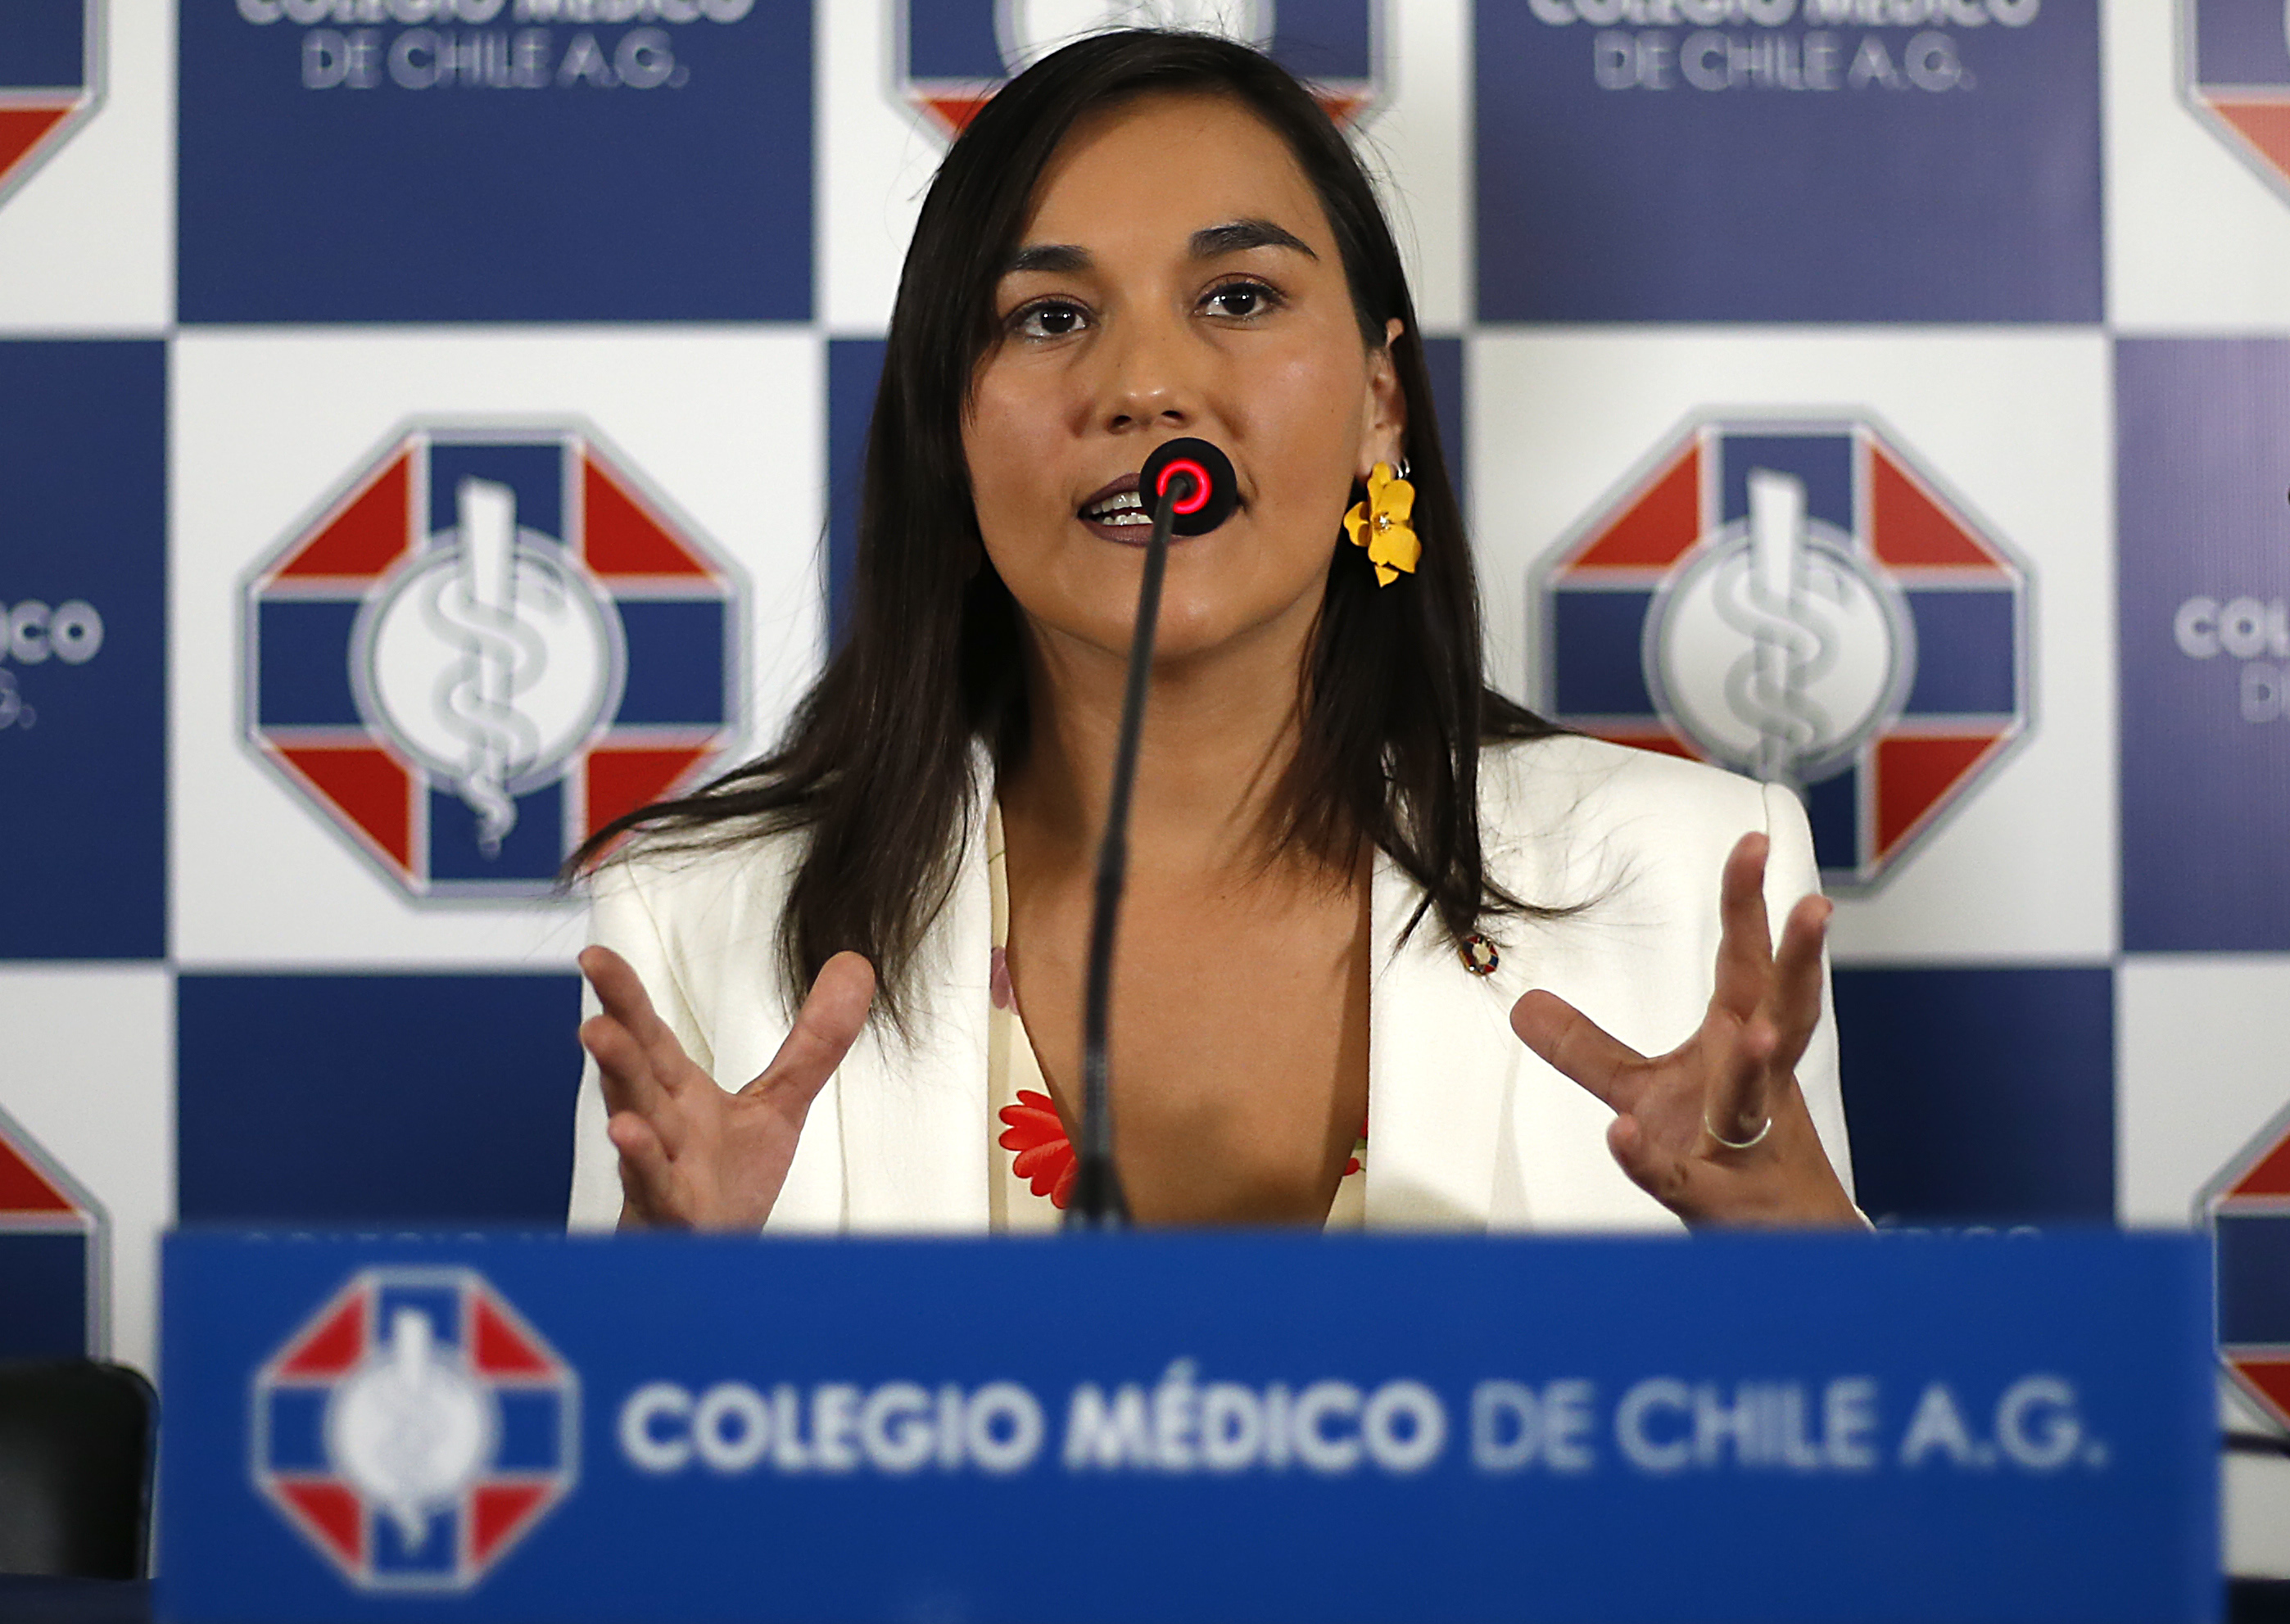 Presidenta Del Colegio Mdico Izkia Siches Ofrece Conferencia De Prensa